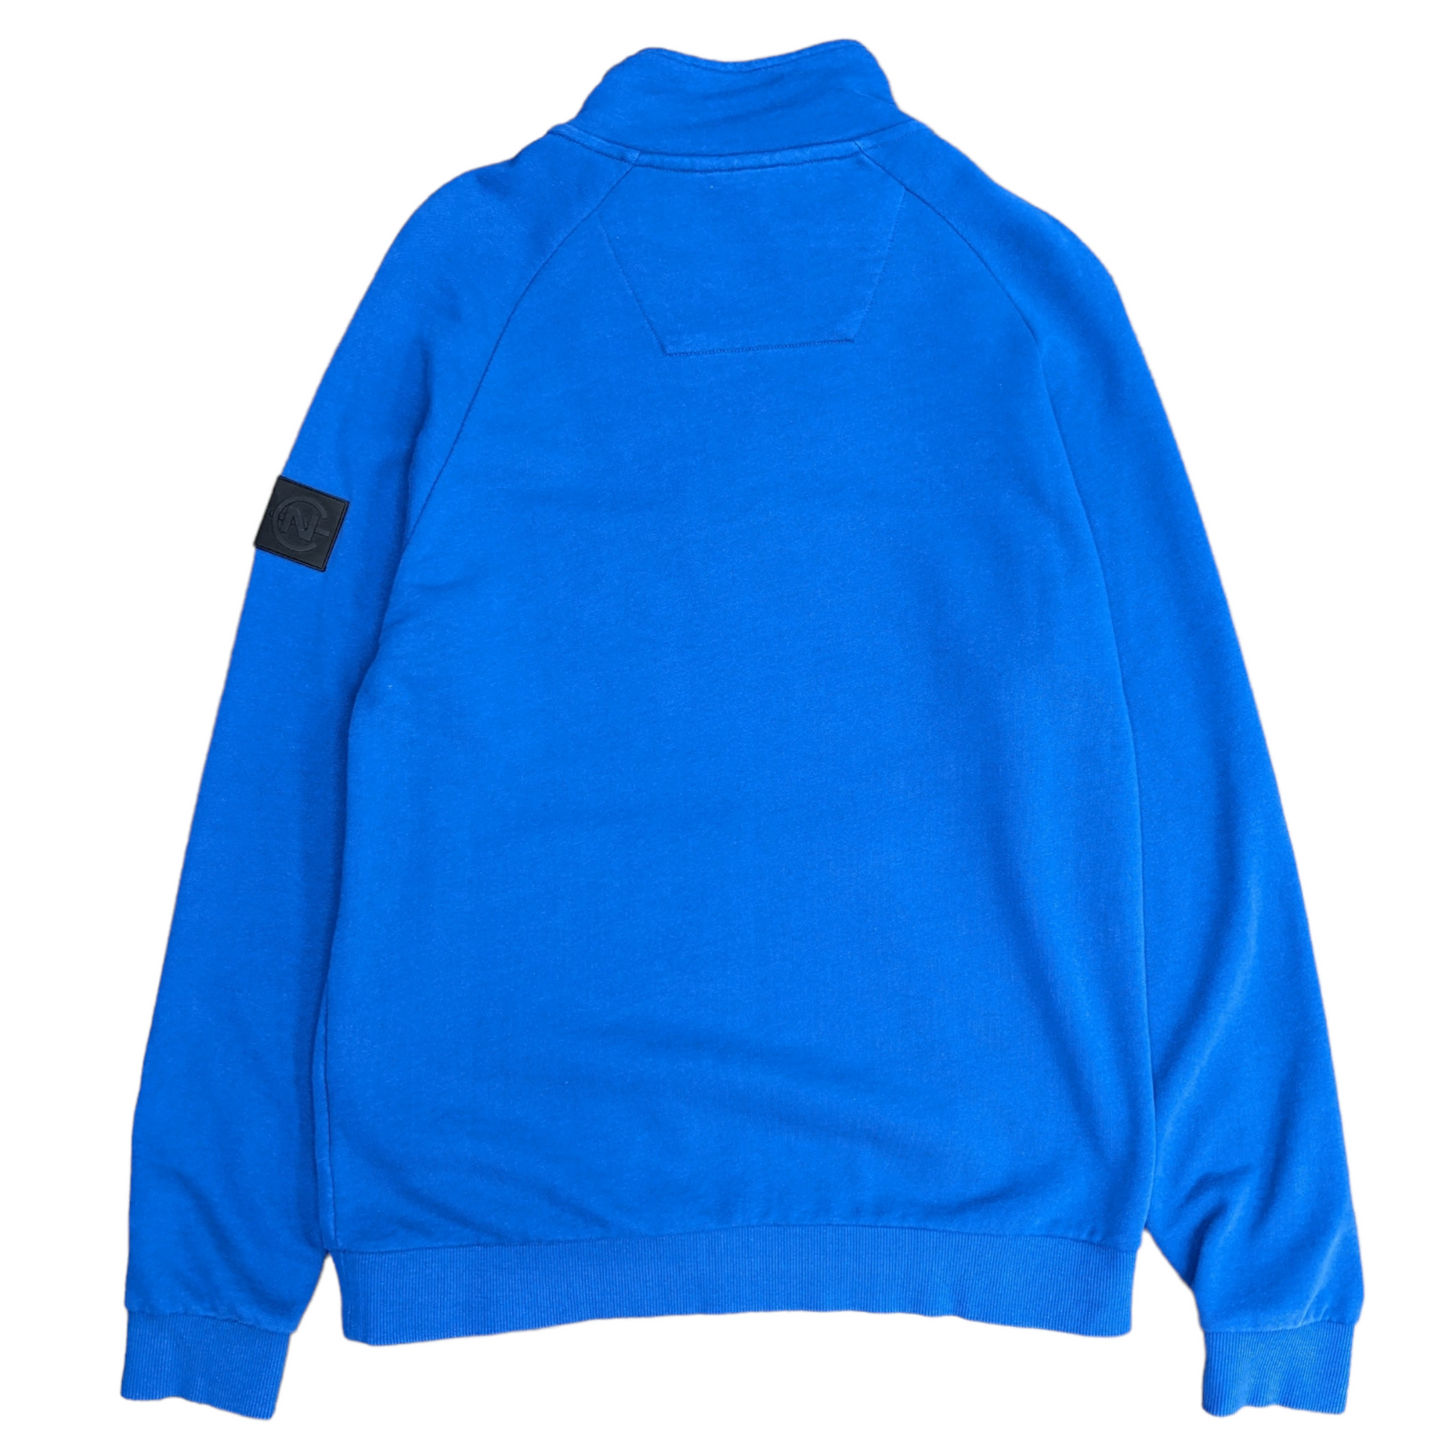 Nautica 1/4 Zip Sweatshirt Size M